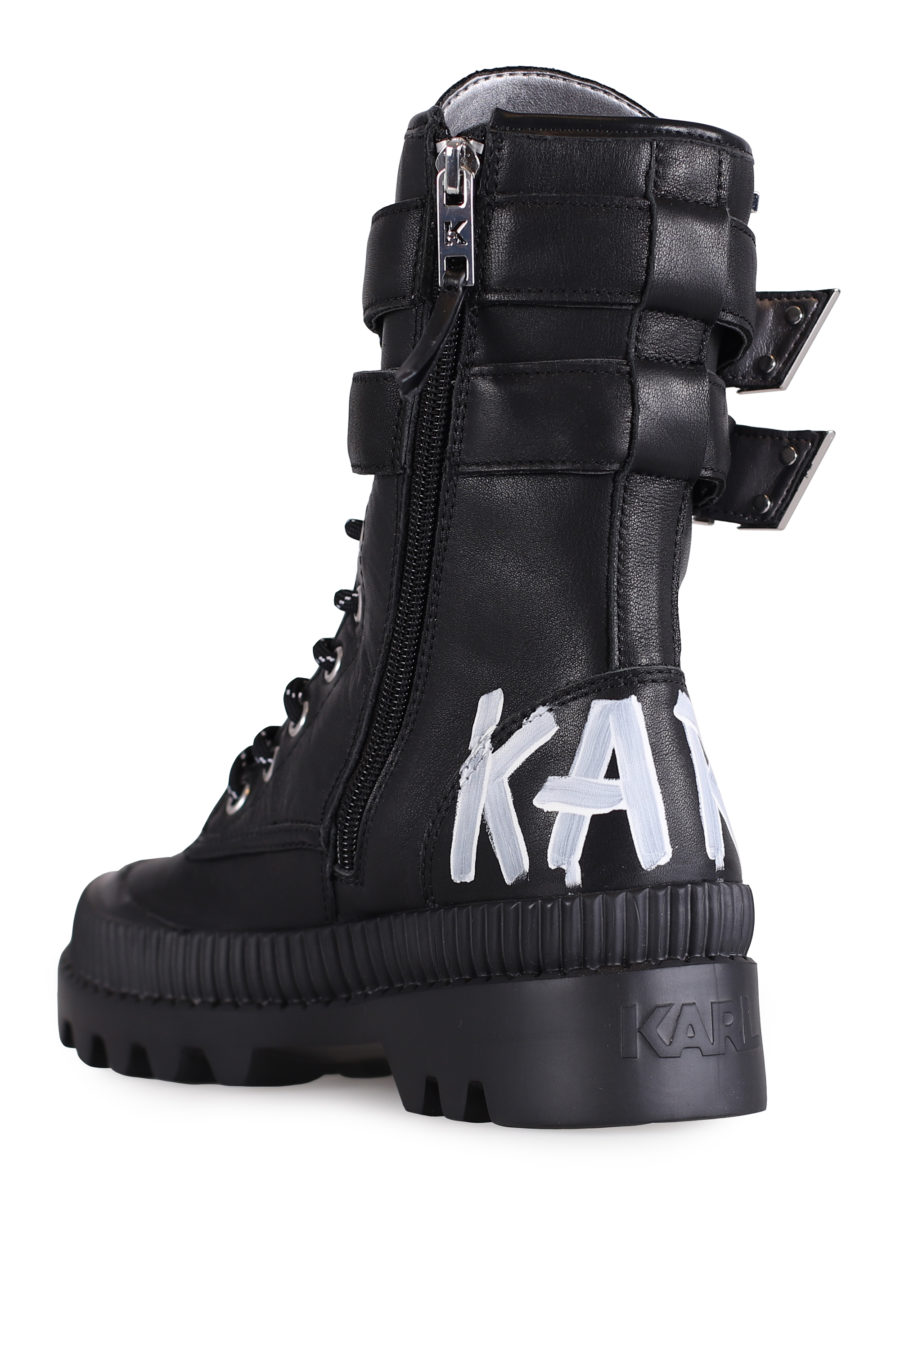 Trekka" boots in black with logo - IMG 0736